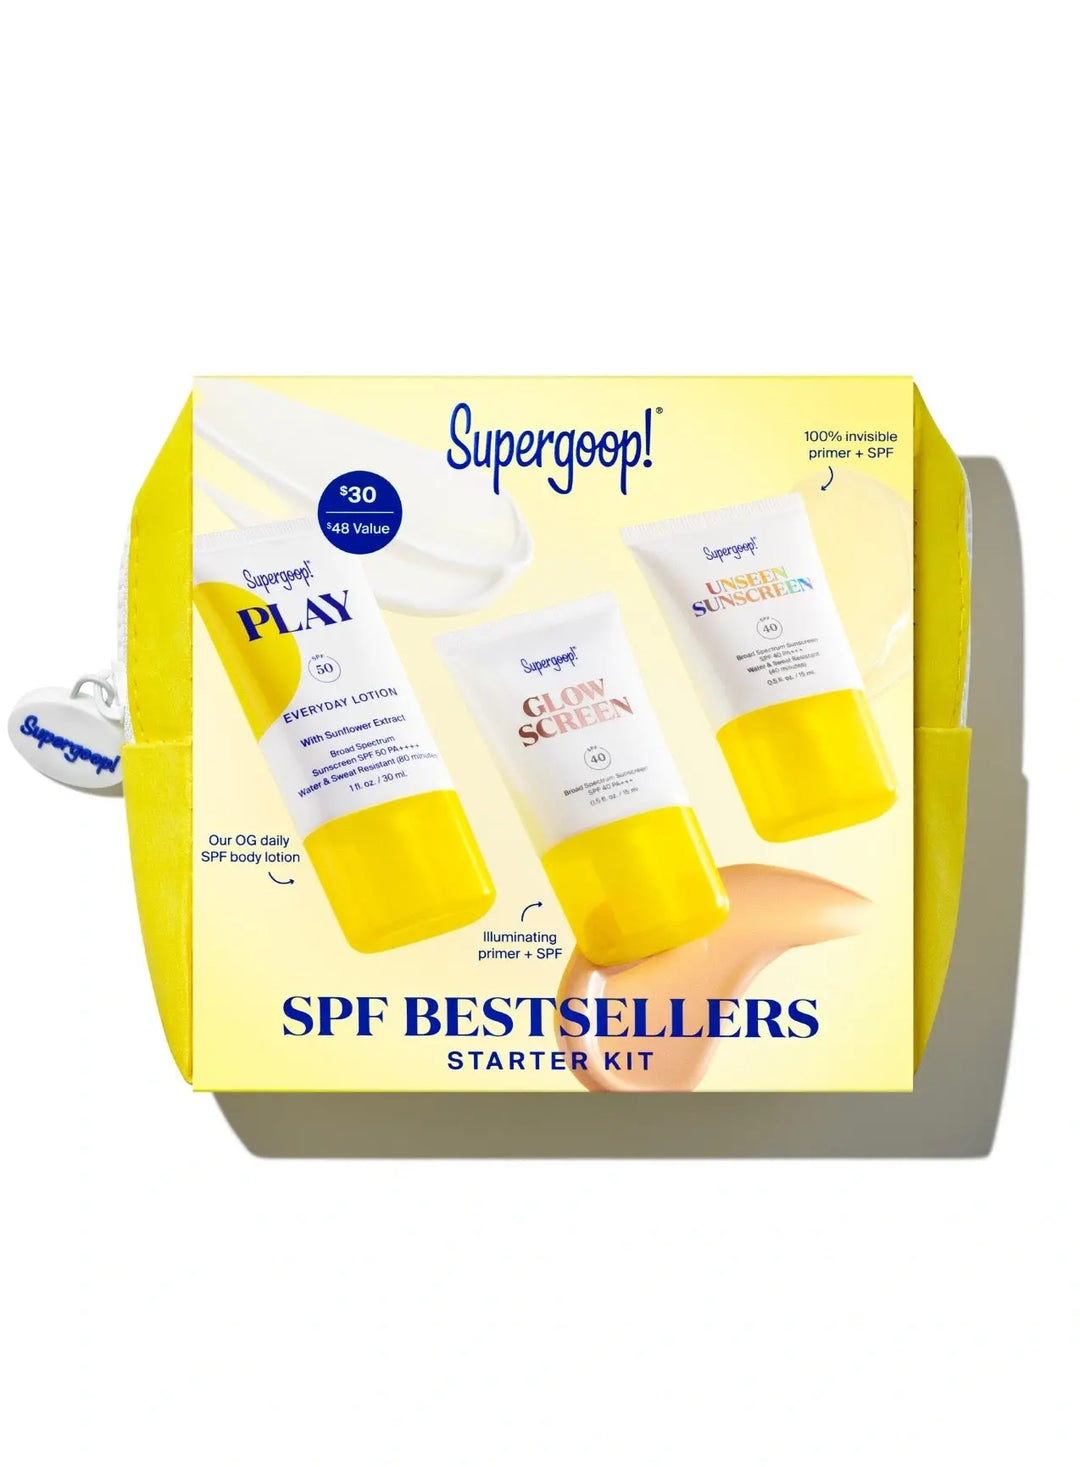 Supergoop! - SPF Bestsellers Starter Kit - Mhalaty